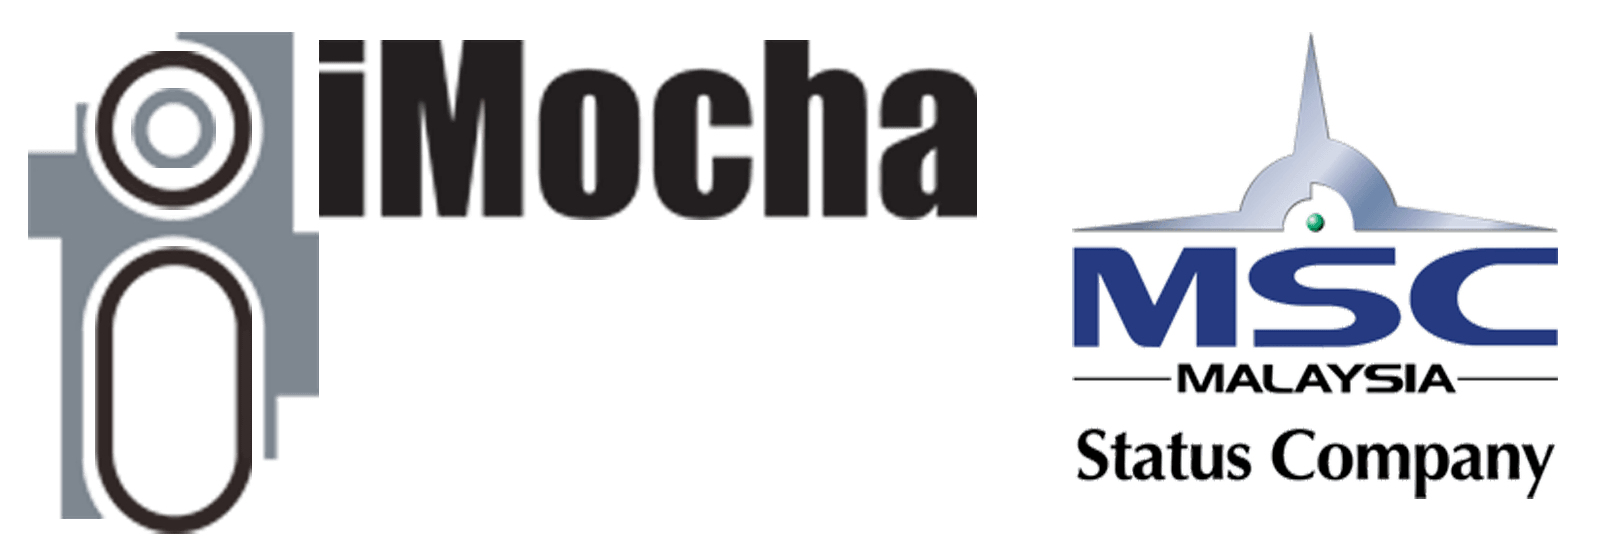 iMocha logo